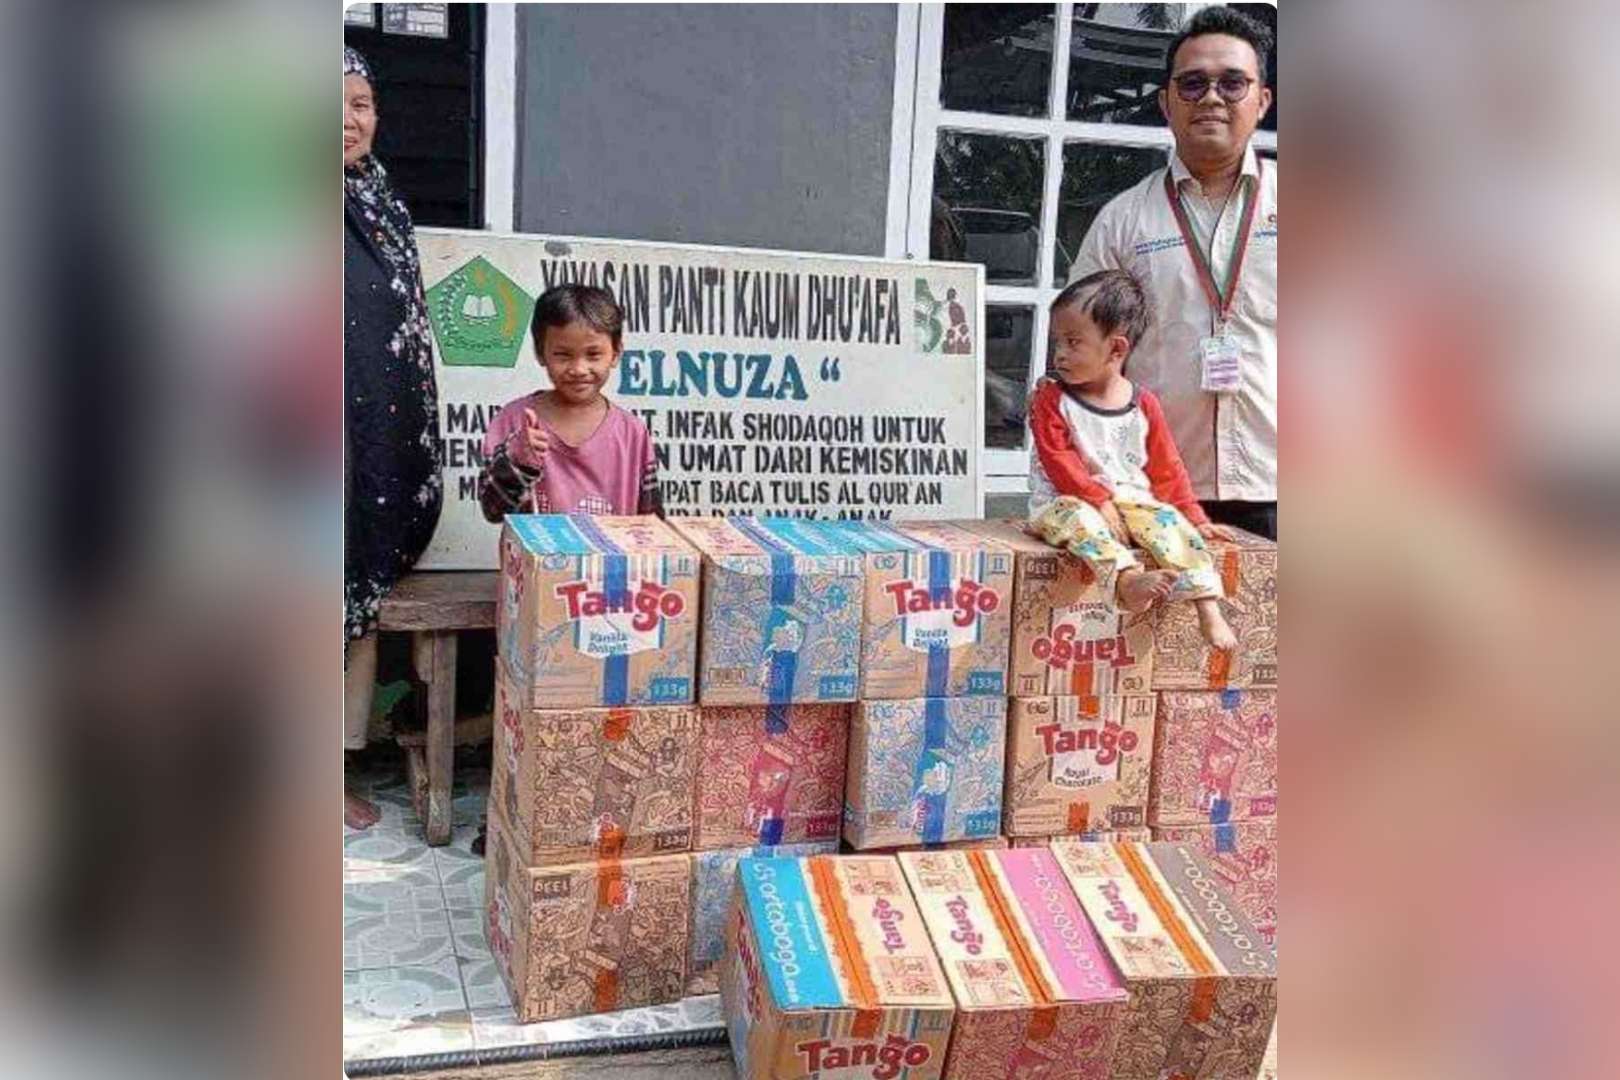 Panti Asuhan Dhuafa Elnuza di Prank Donatur, Setelah Foto dan Stempel Bantuan Dibawa Lagi